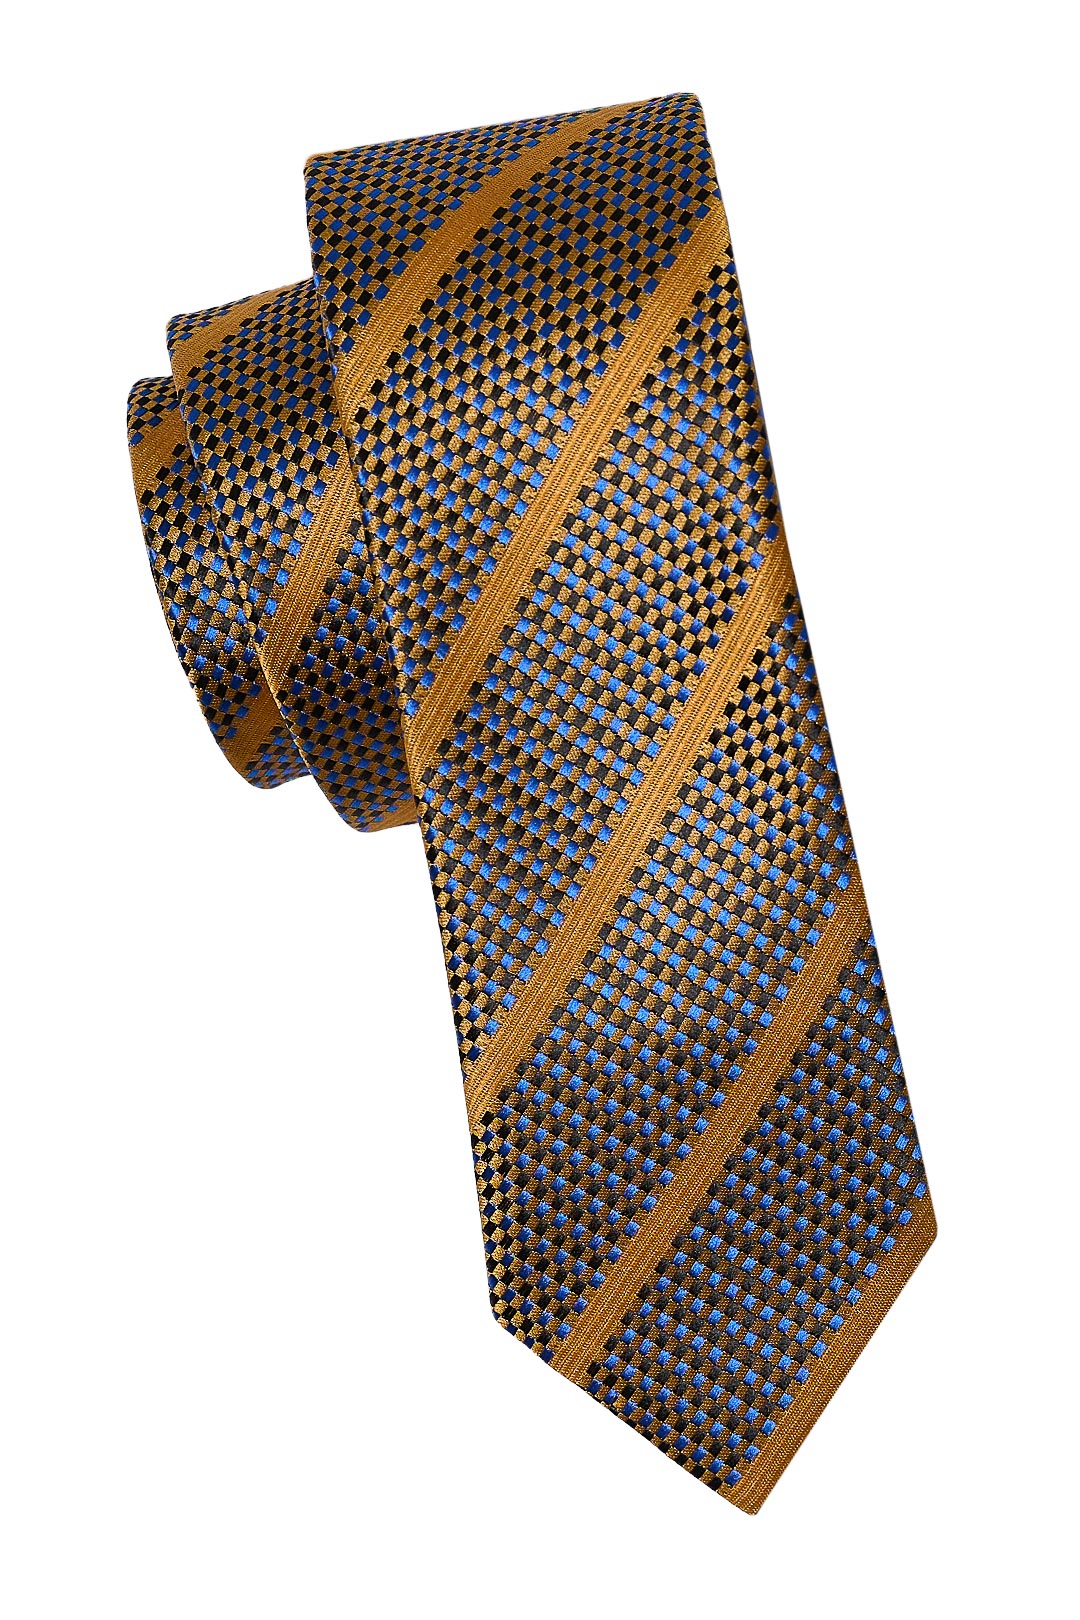 Blue & Gold Rep Tie